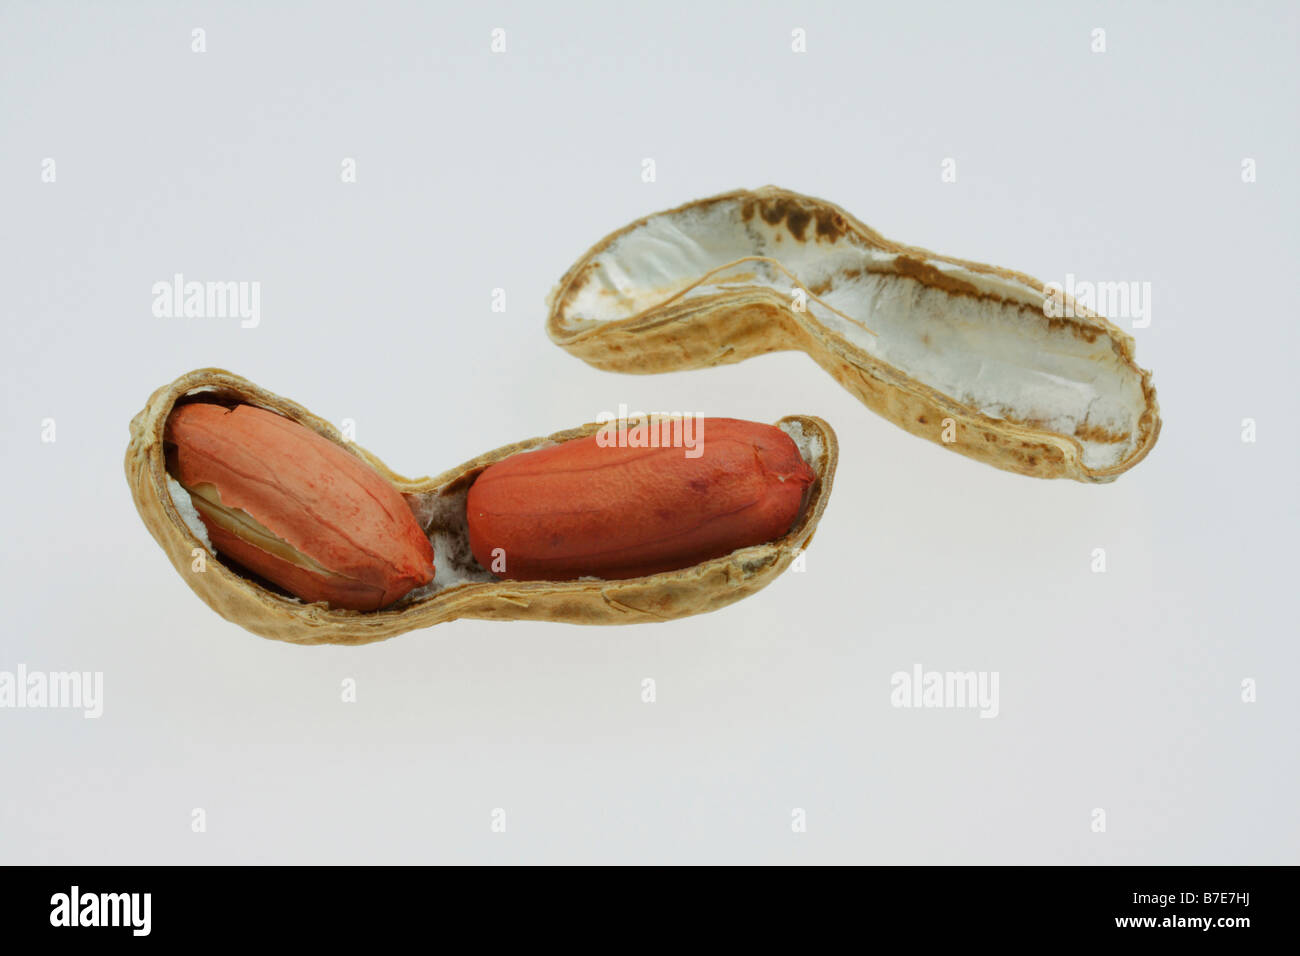 clip image cracked shell of roasted peanut Stock Photo